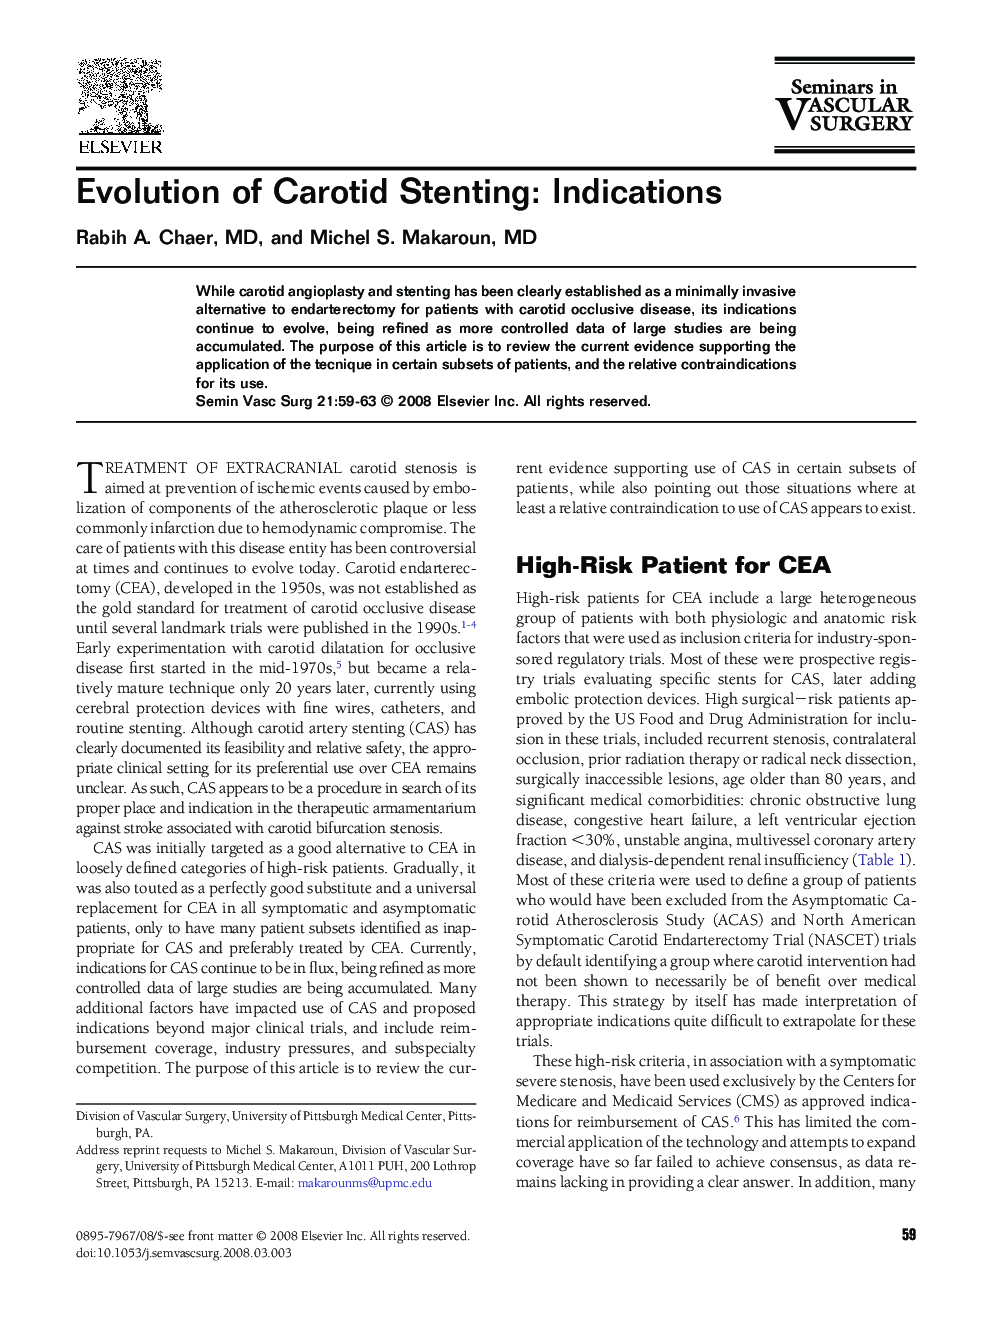 Evolution of Carotid Stenting: Indications